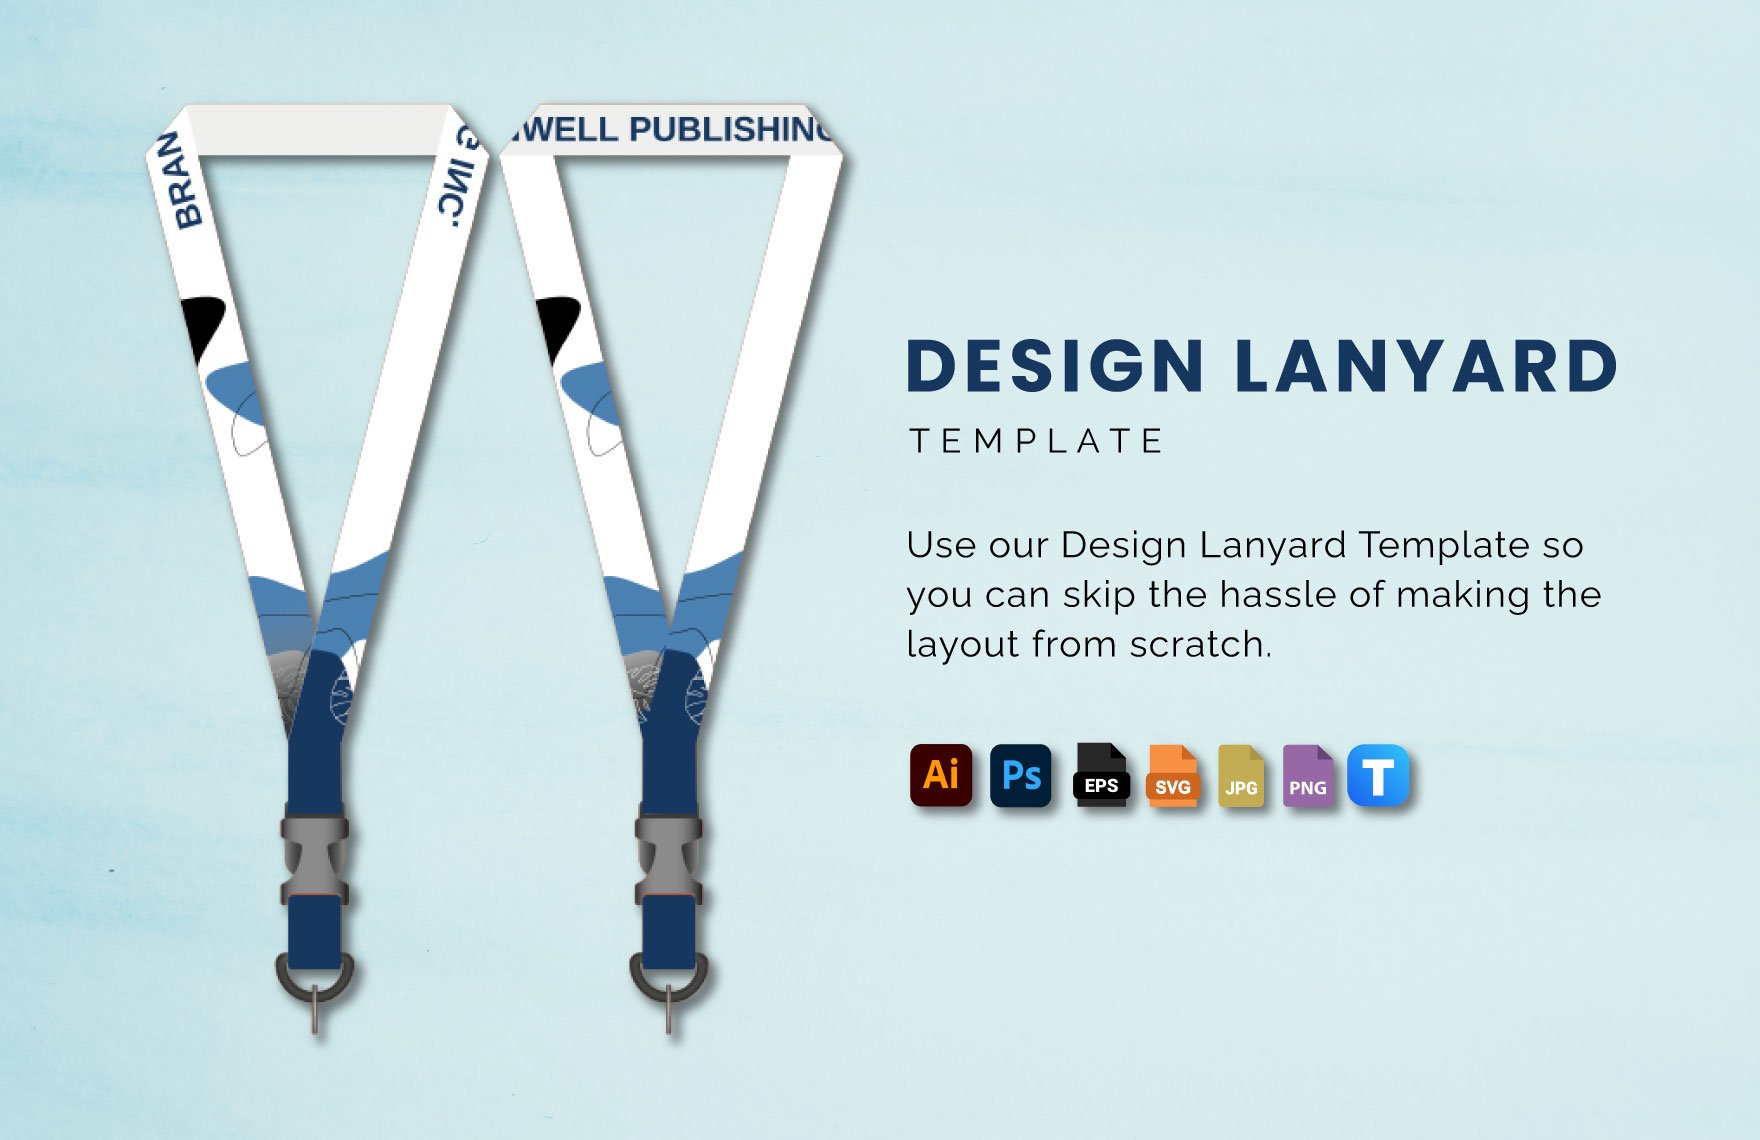 Design Lanyard Template